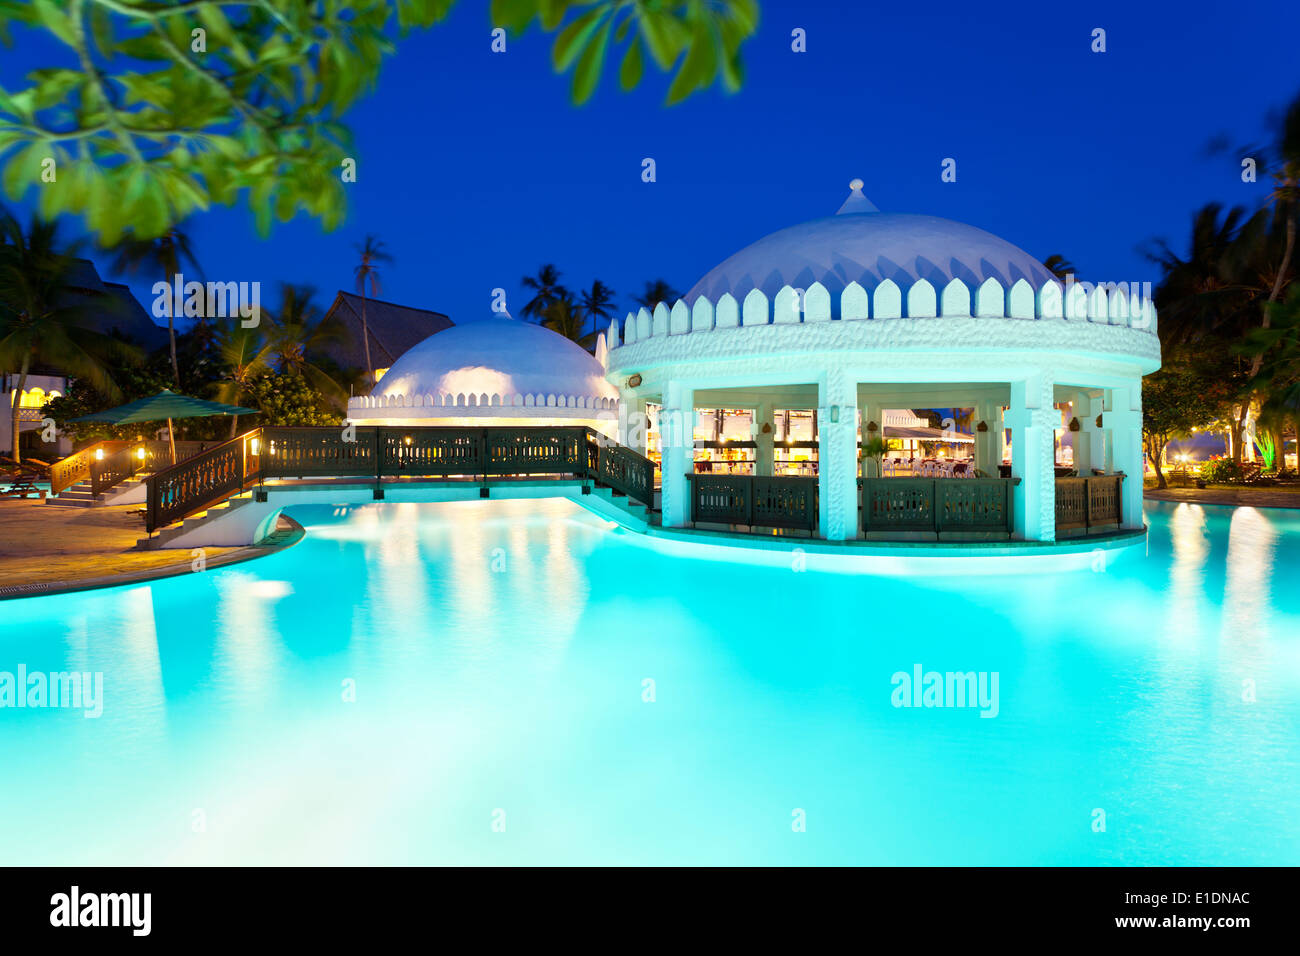 Illuminated pool and bar area at night. Stock Photo